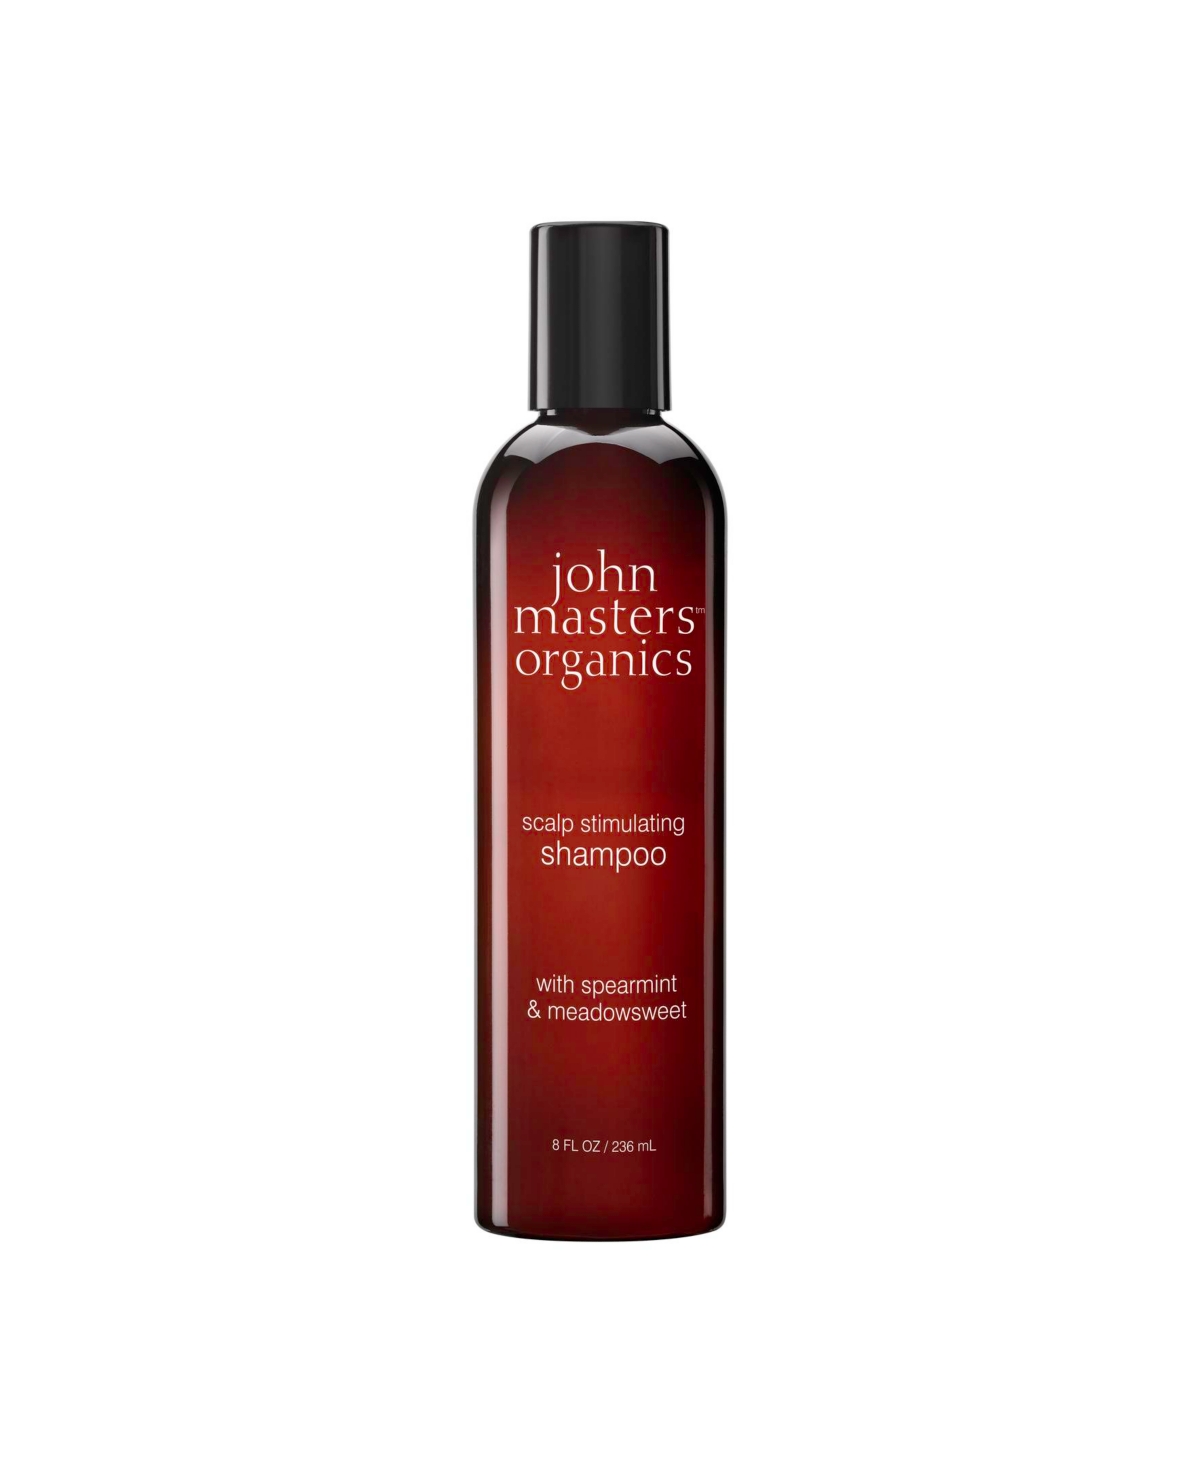 John Masters Organics Scalp Stimulating Shampoo With Spearmint & Meadowsweet, 8 Oz.